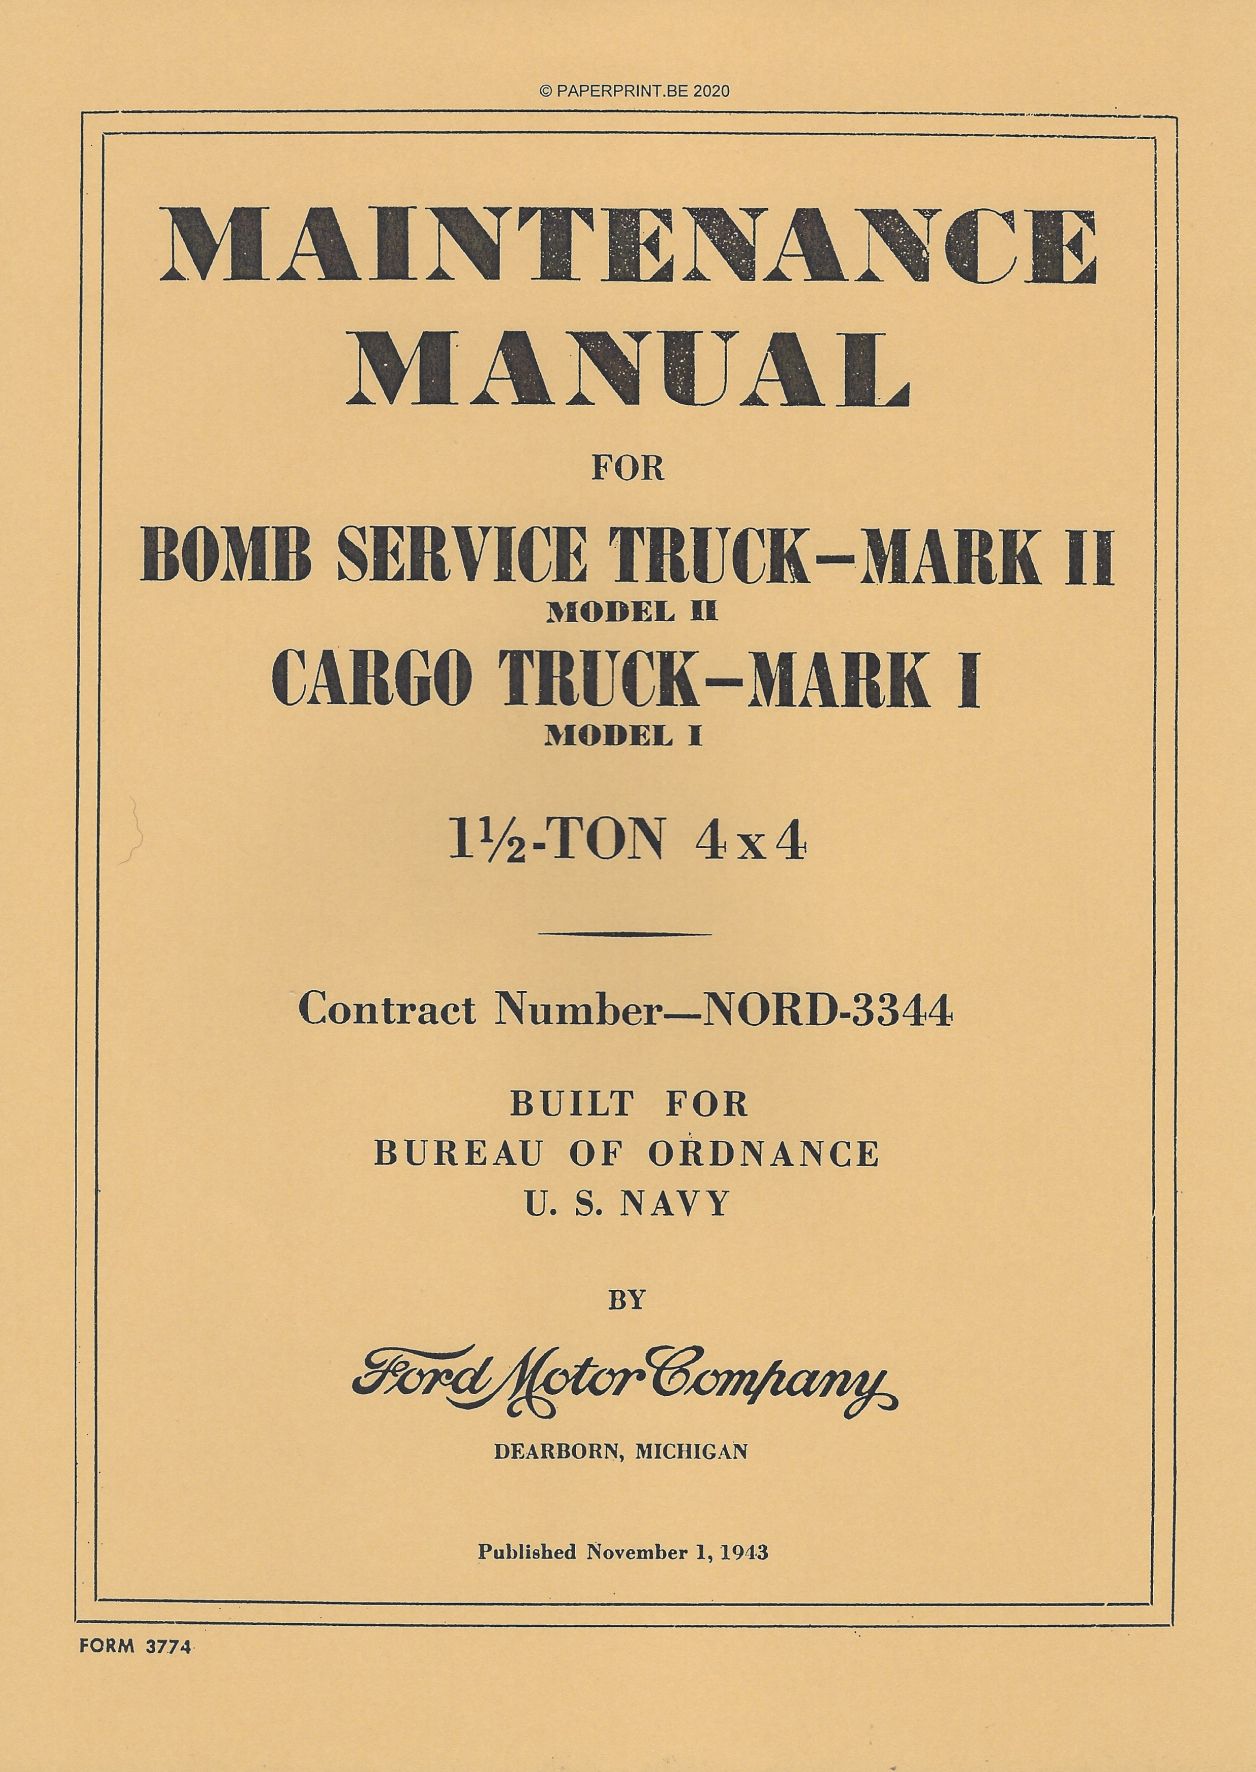 BOMB SERVICE TRUCK MARK II AND CARGO TRUCK MARK I MAINTENANCE MANUAL US